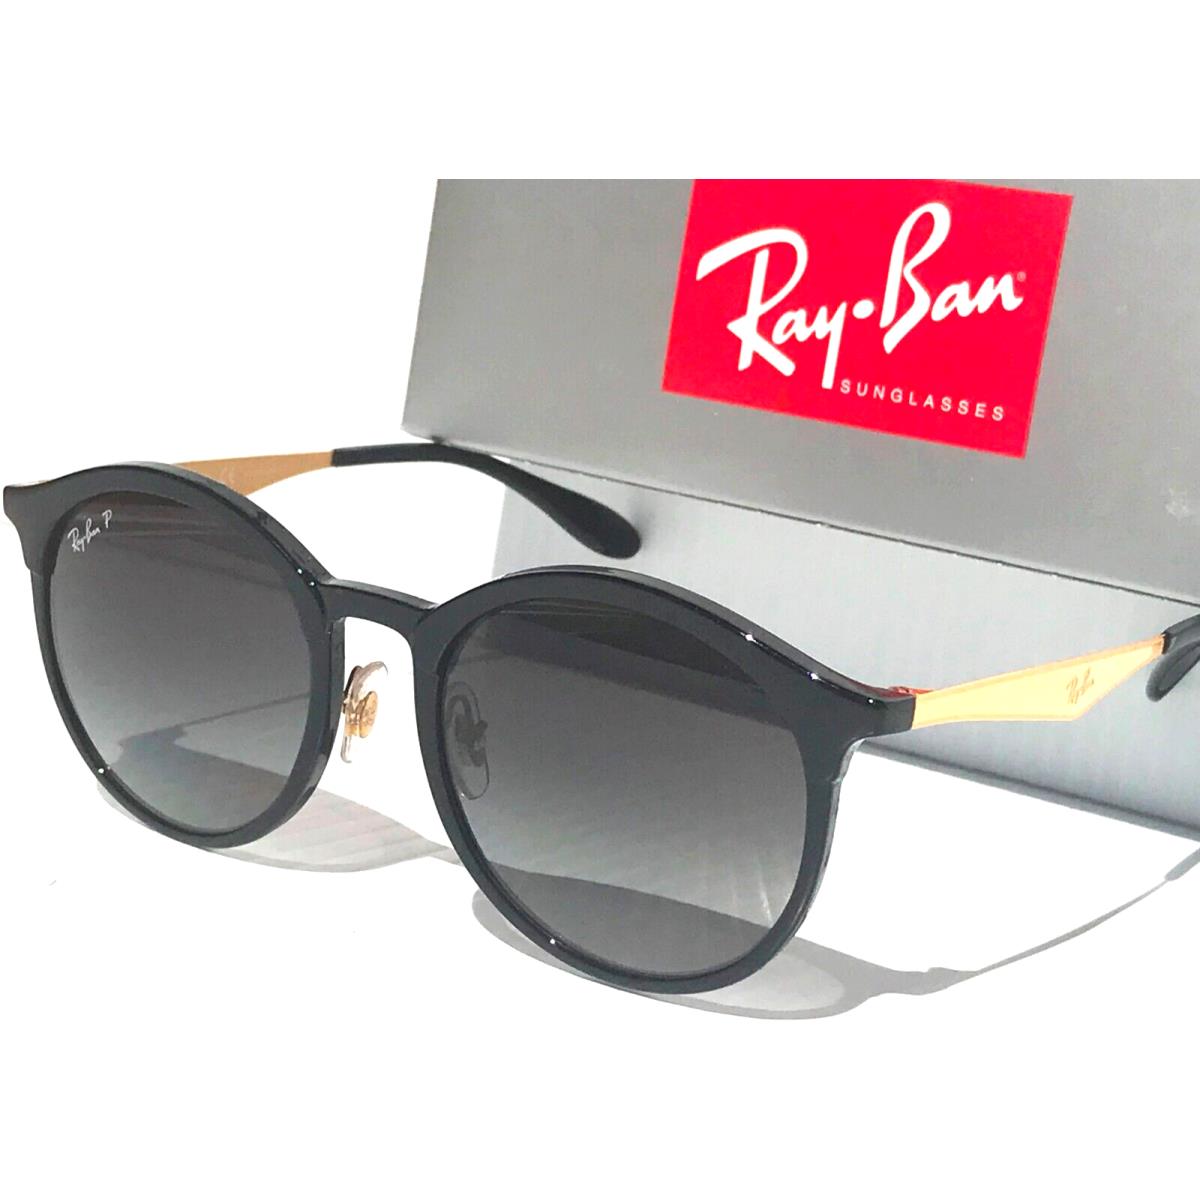 Ray-Ban sunglasses Emma - Frame: Black and Gold, Lens: Grey 1